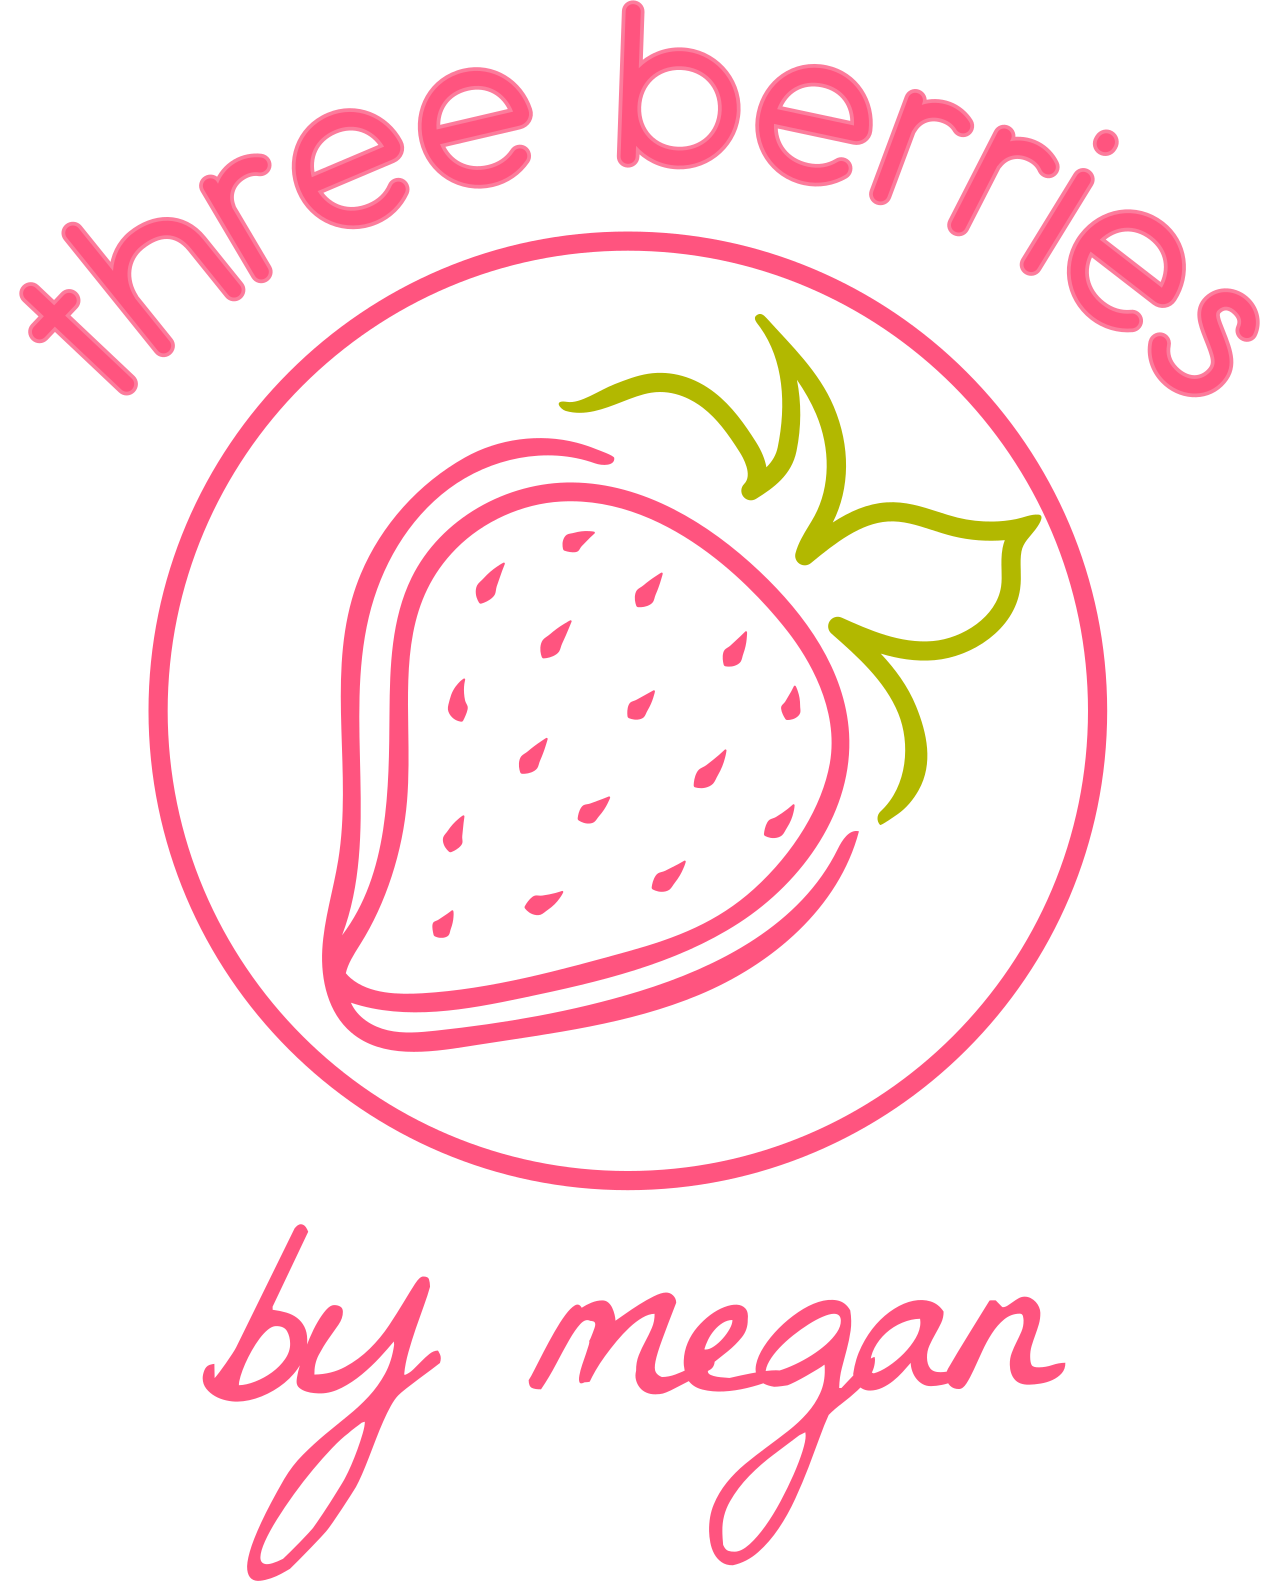 three berries's web page